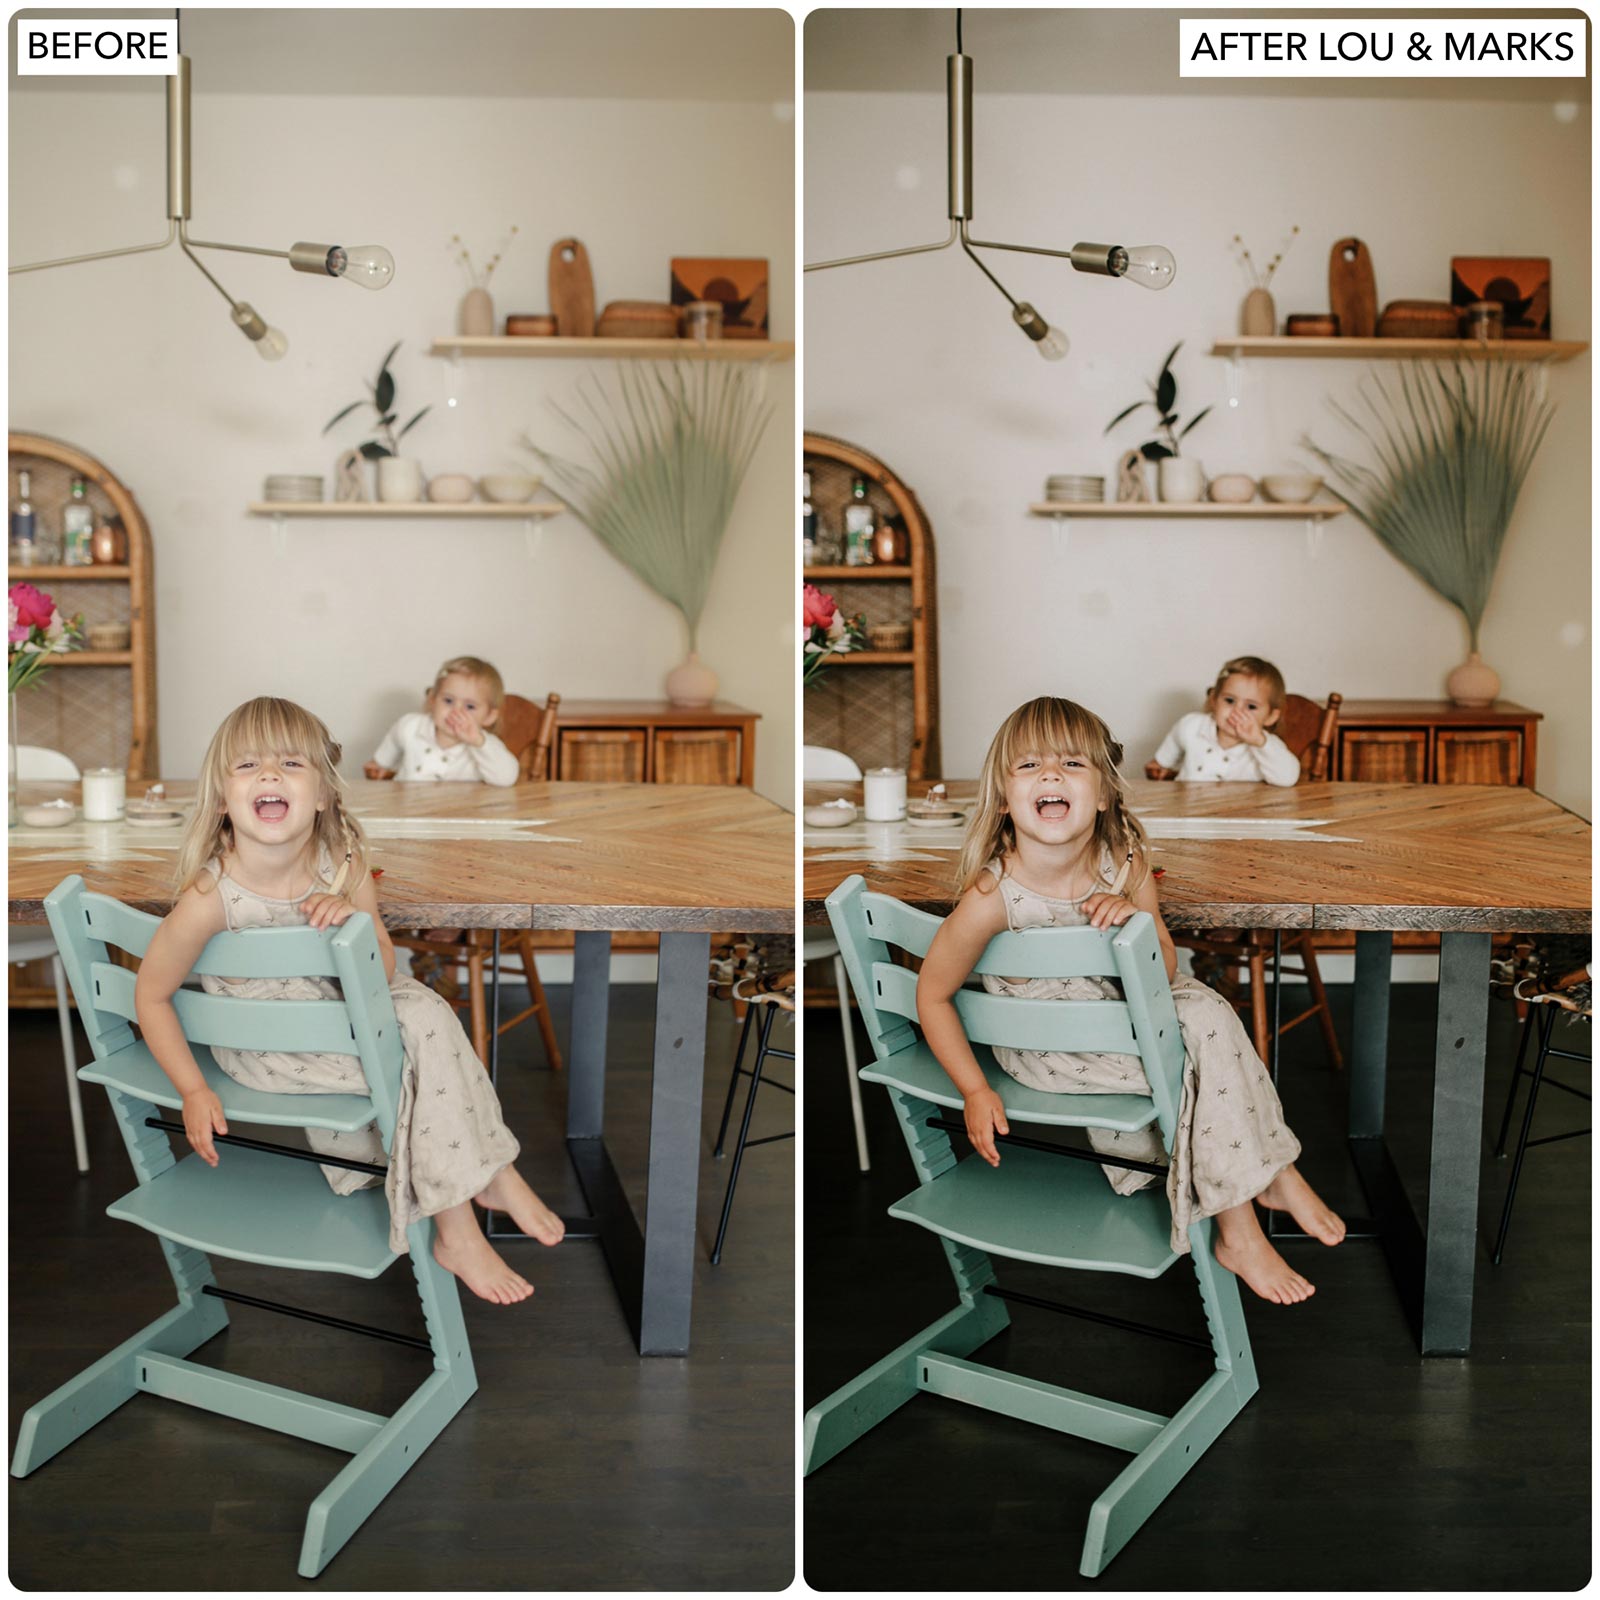 Before & After Muted Tones  Lightroom Presets For Adobe Lightroom By Lou Marks Presets